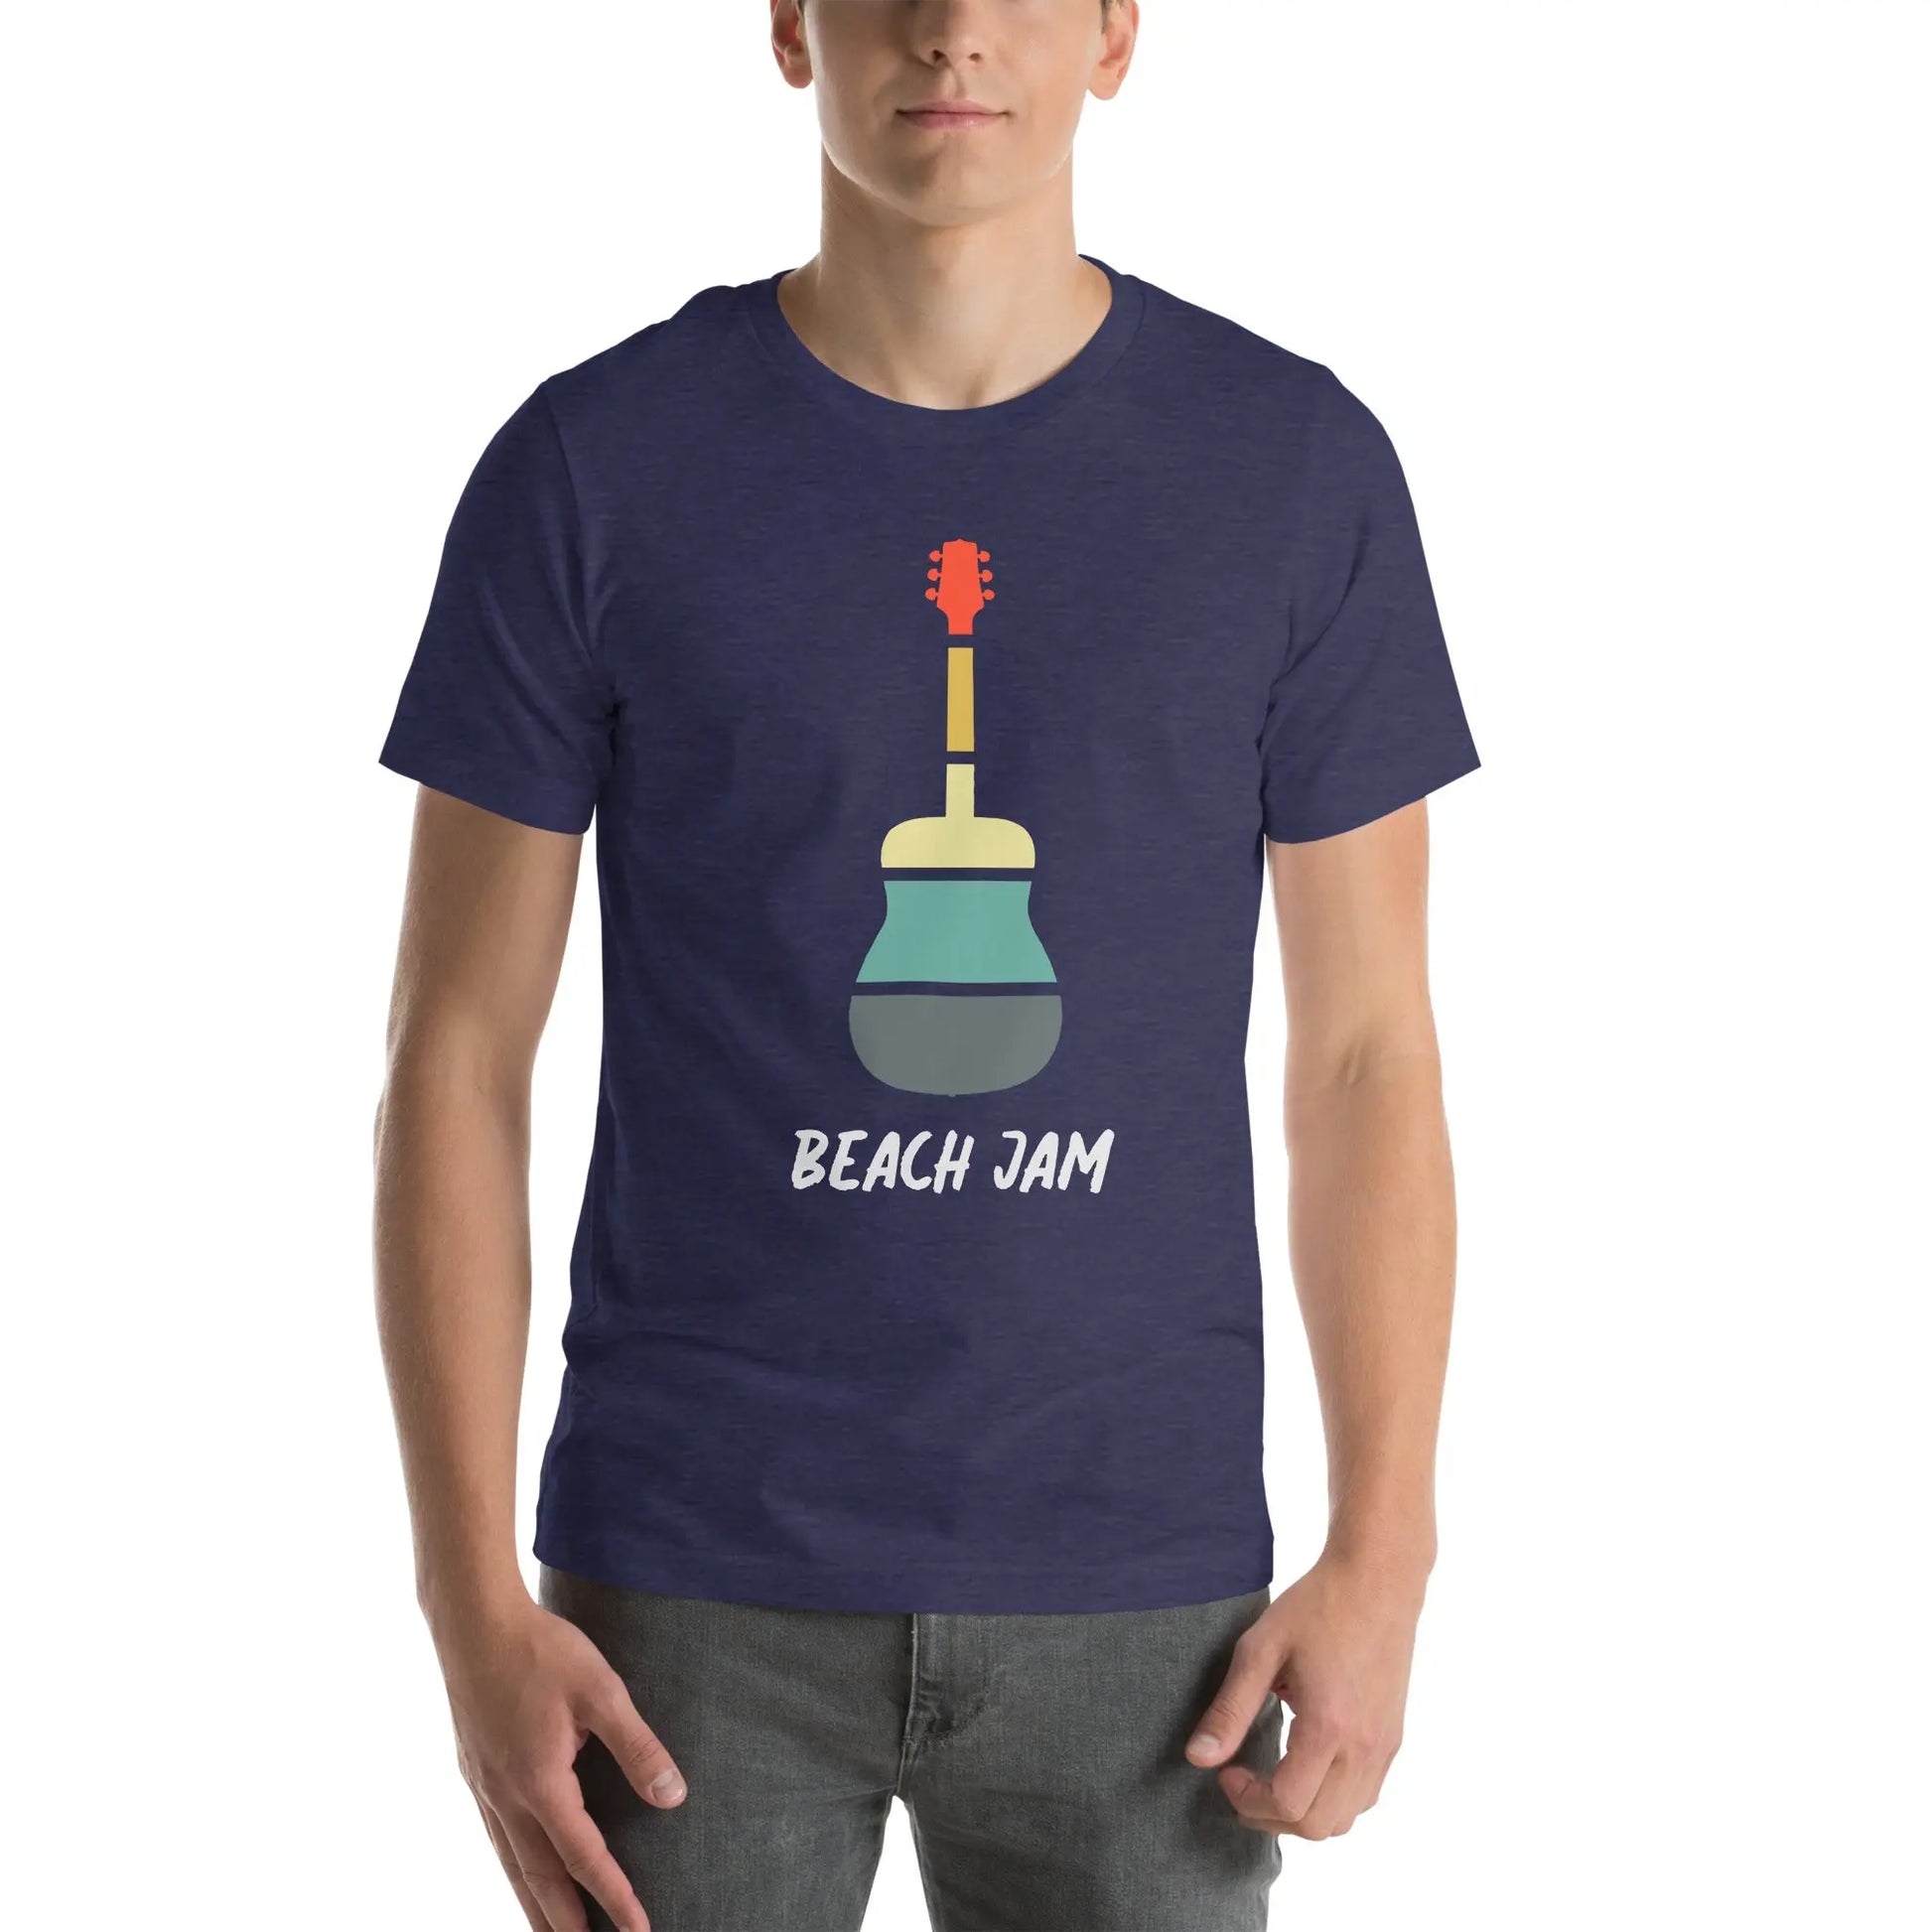 Beach Jam with this Coastal Adult Unisex T-Shirt - Coastal Journeyz2552342_8495